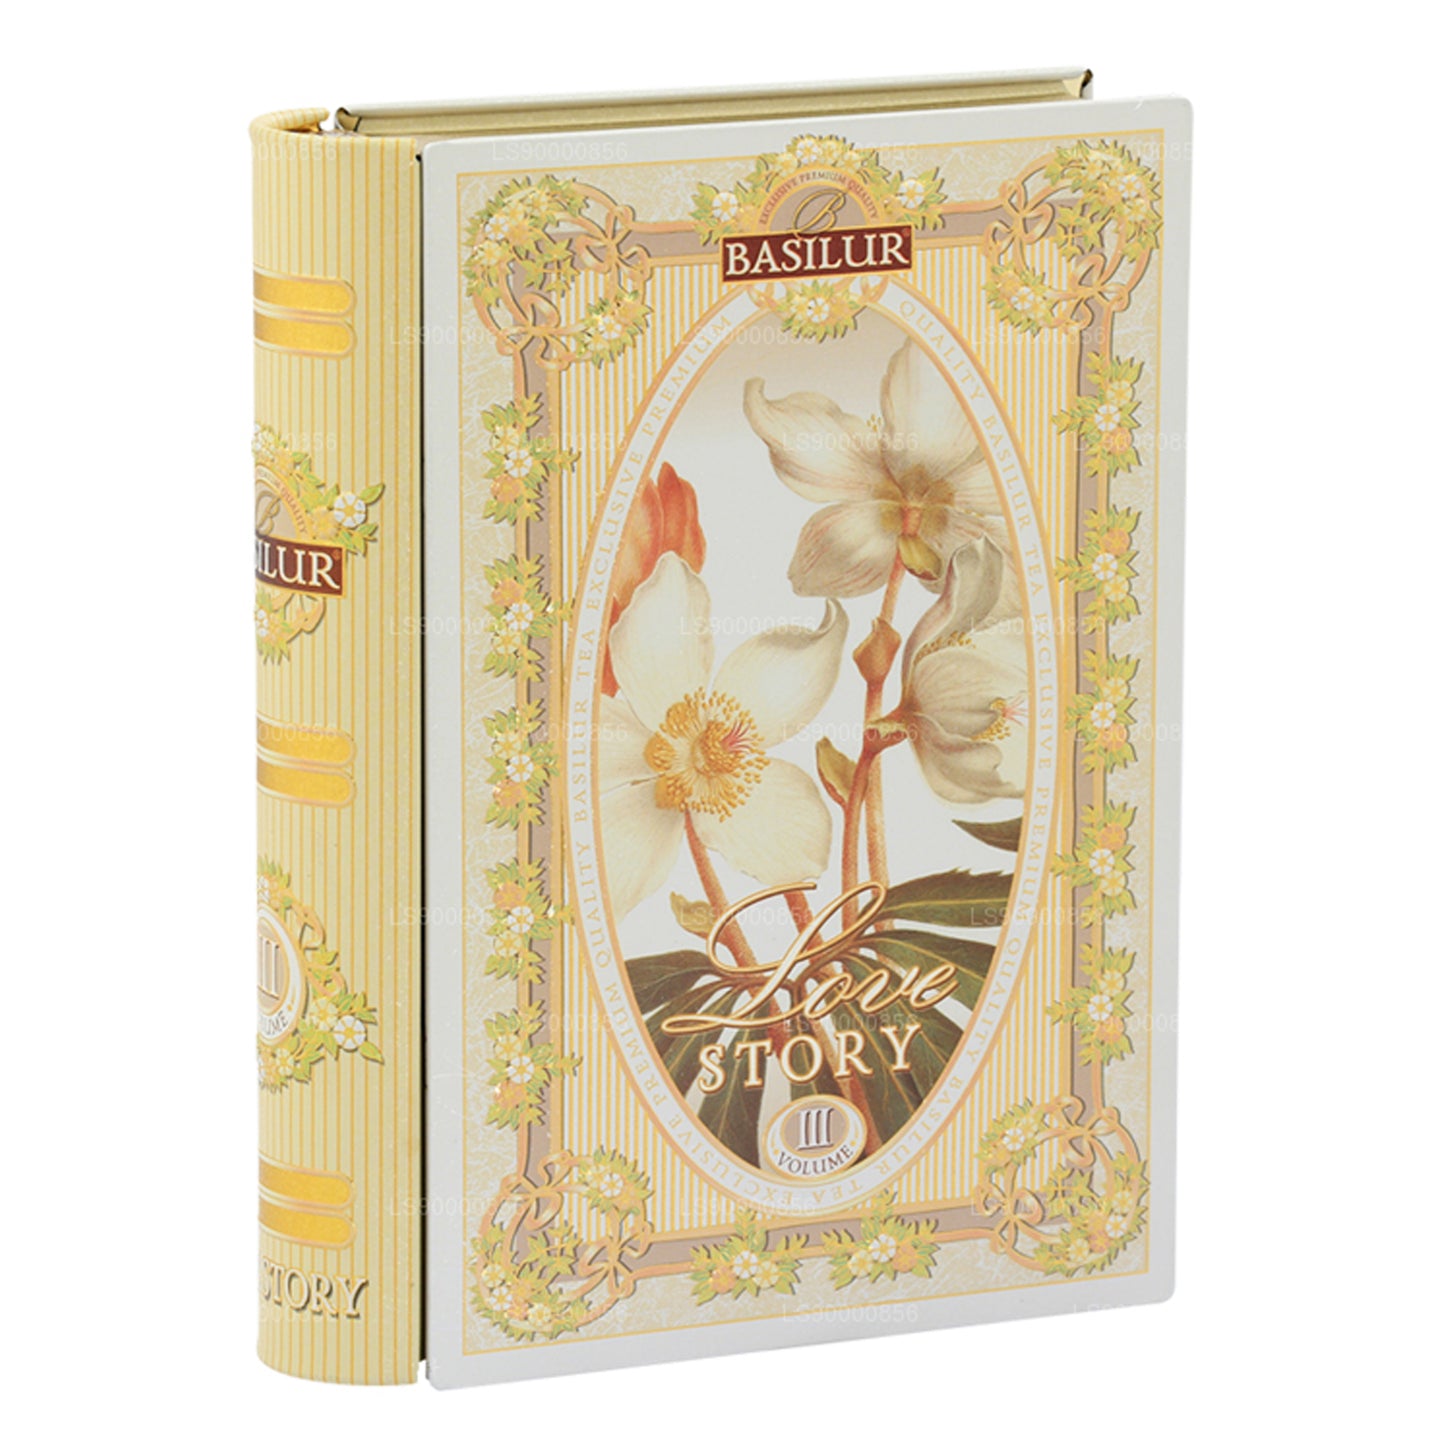 Basilur Tea Book "Love Story - Volume III" (100g) Caddy